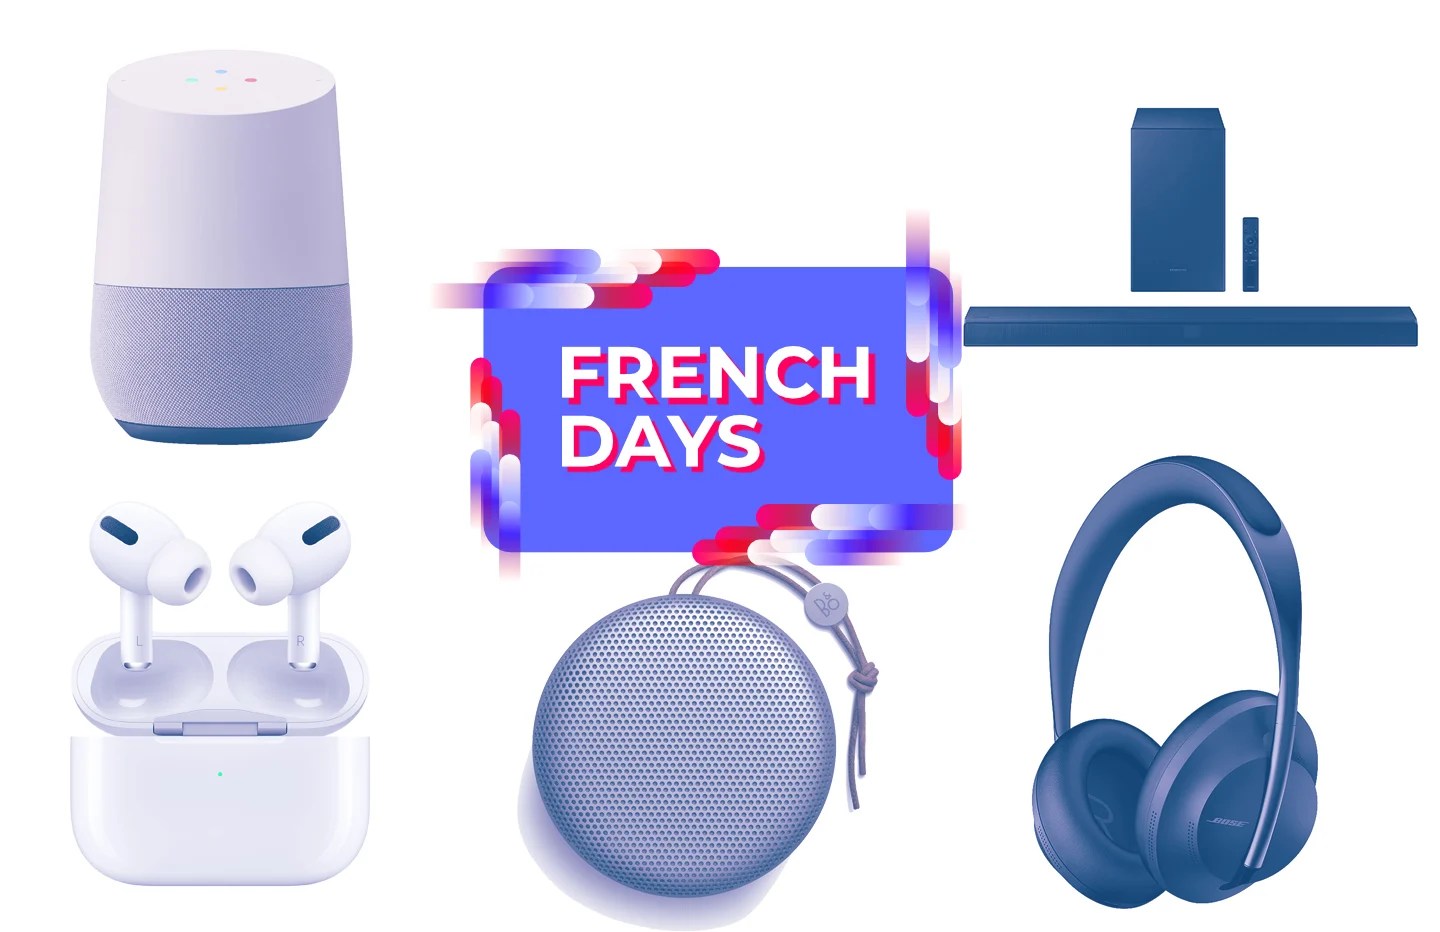 AirPods Pro, Sony WH-1000XM3 : les meilleures offres audio des French Days 2020